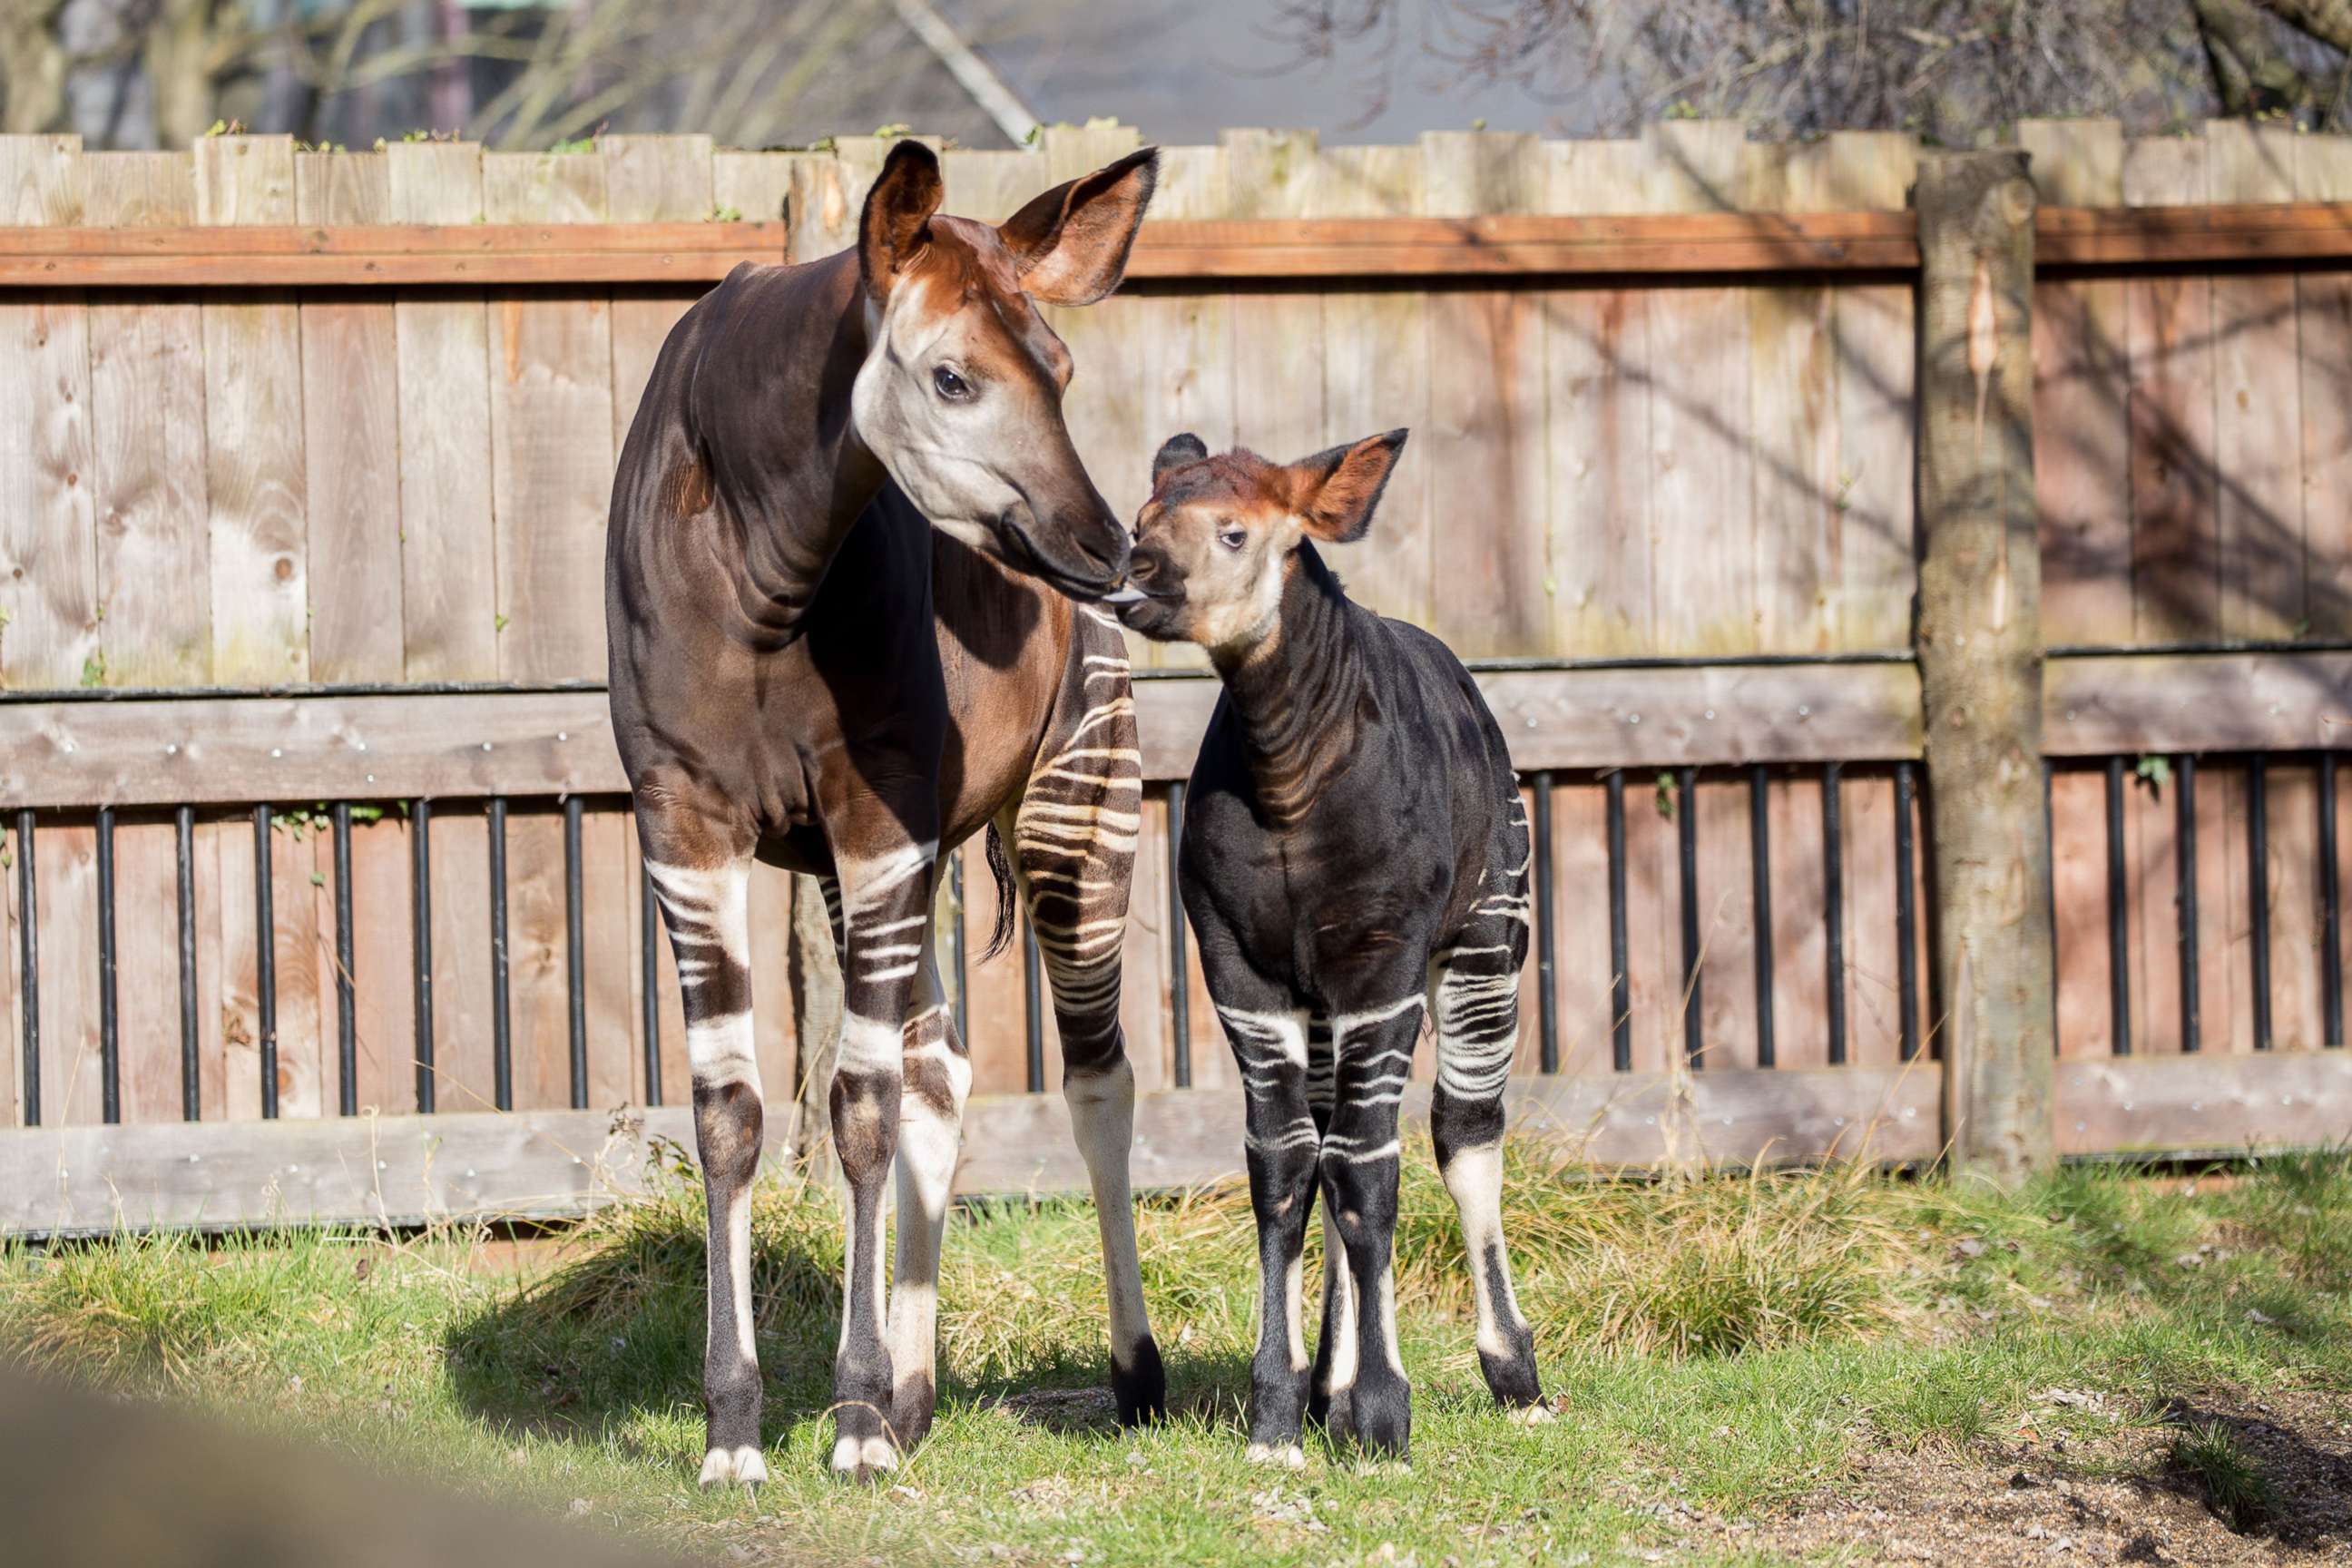 Zoo shows off okapi named after Meghan Markle - ABC News